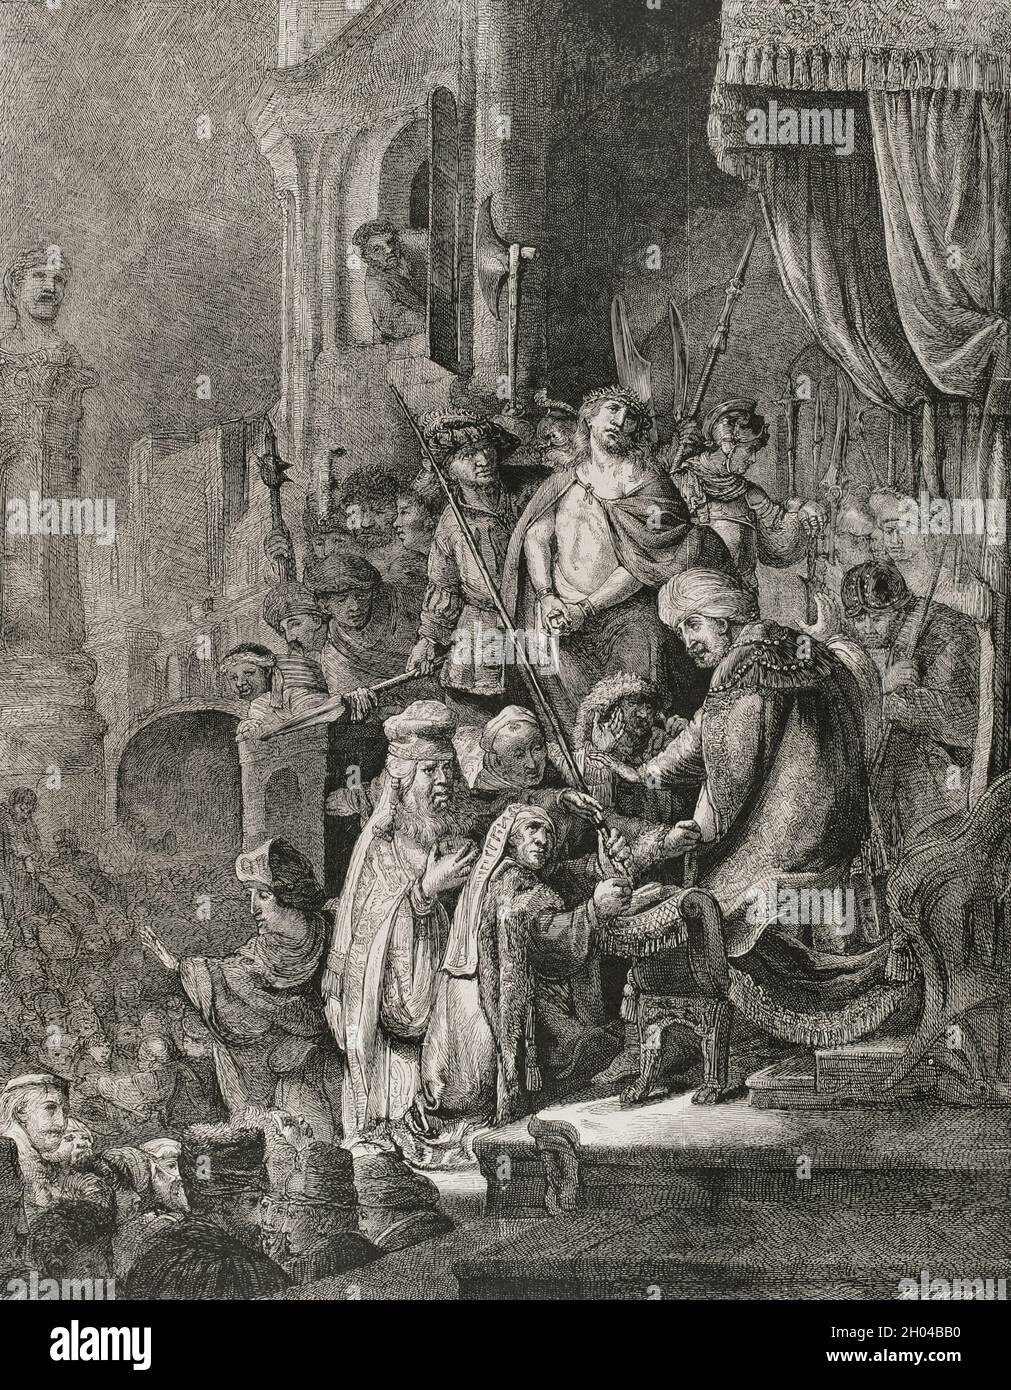 New Testament. Jesus Christ before Pontius Pilate. Facsimile of an etching by P. Rembrandt. La Ilustración Española y Americana, 1878. Stock Photo